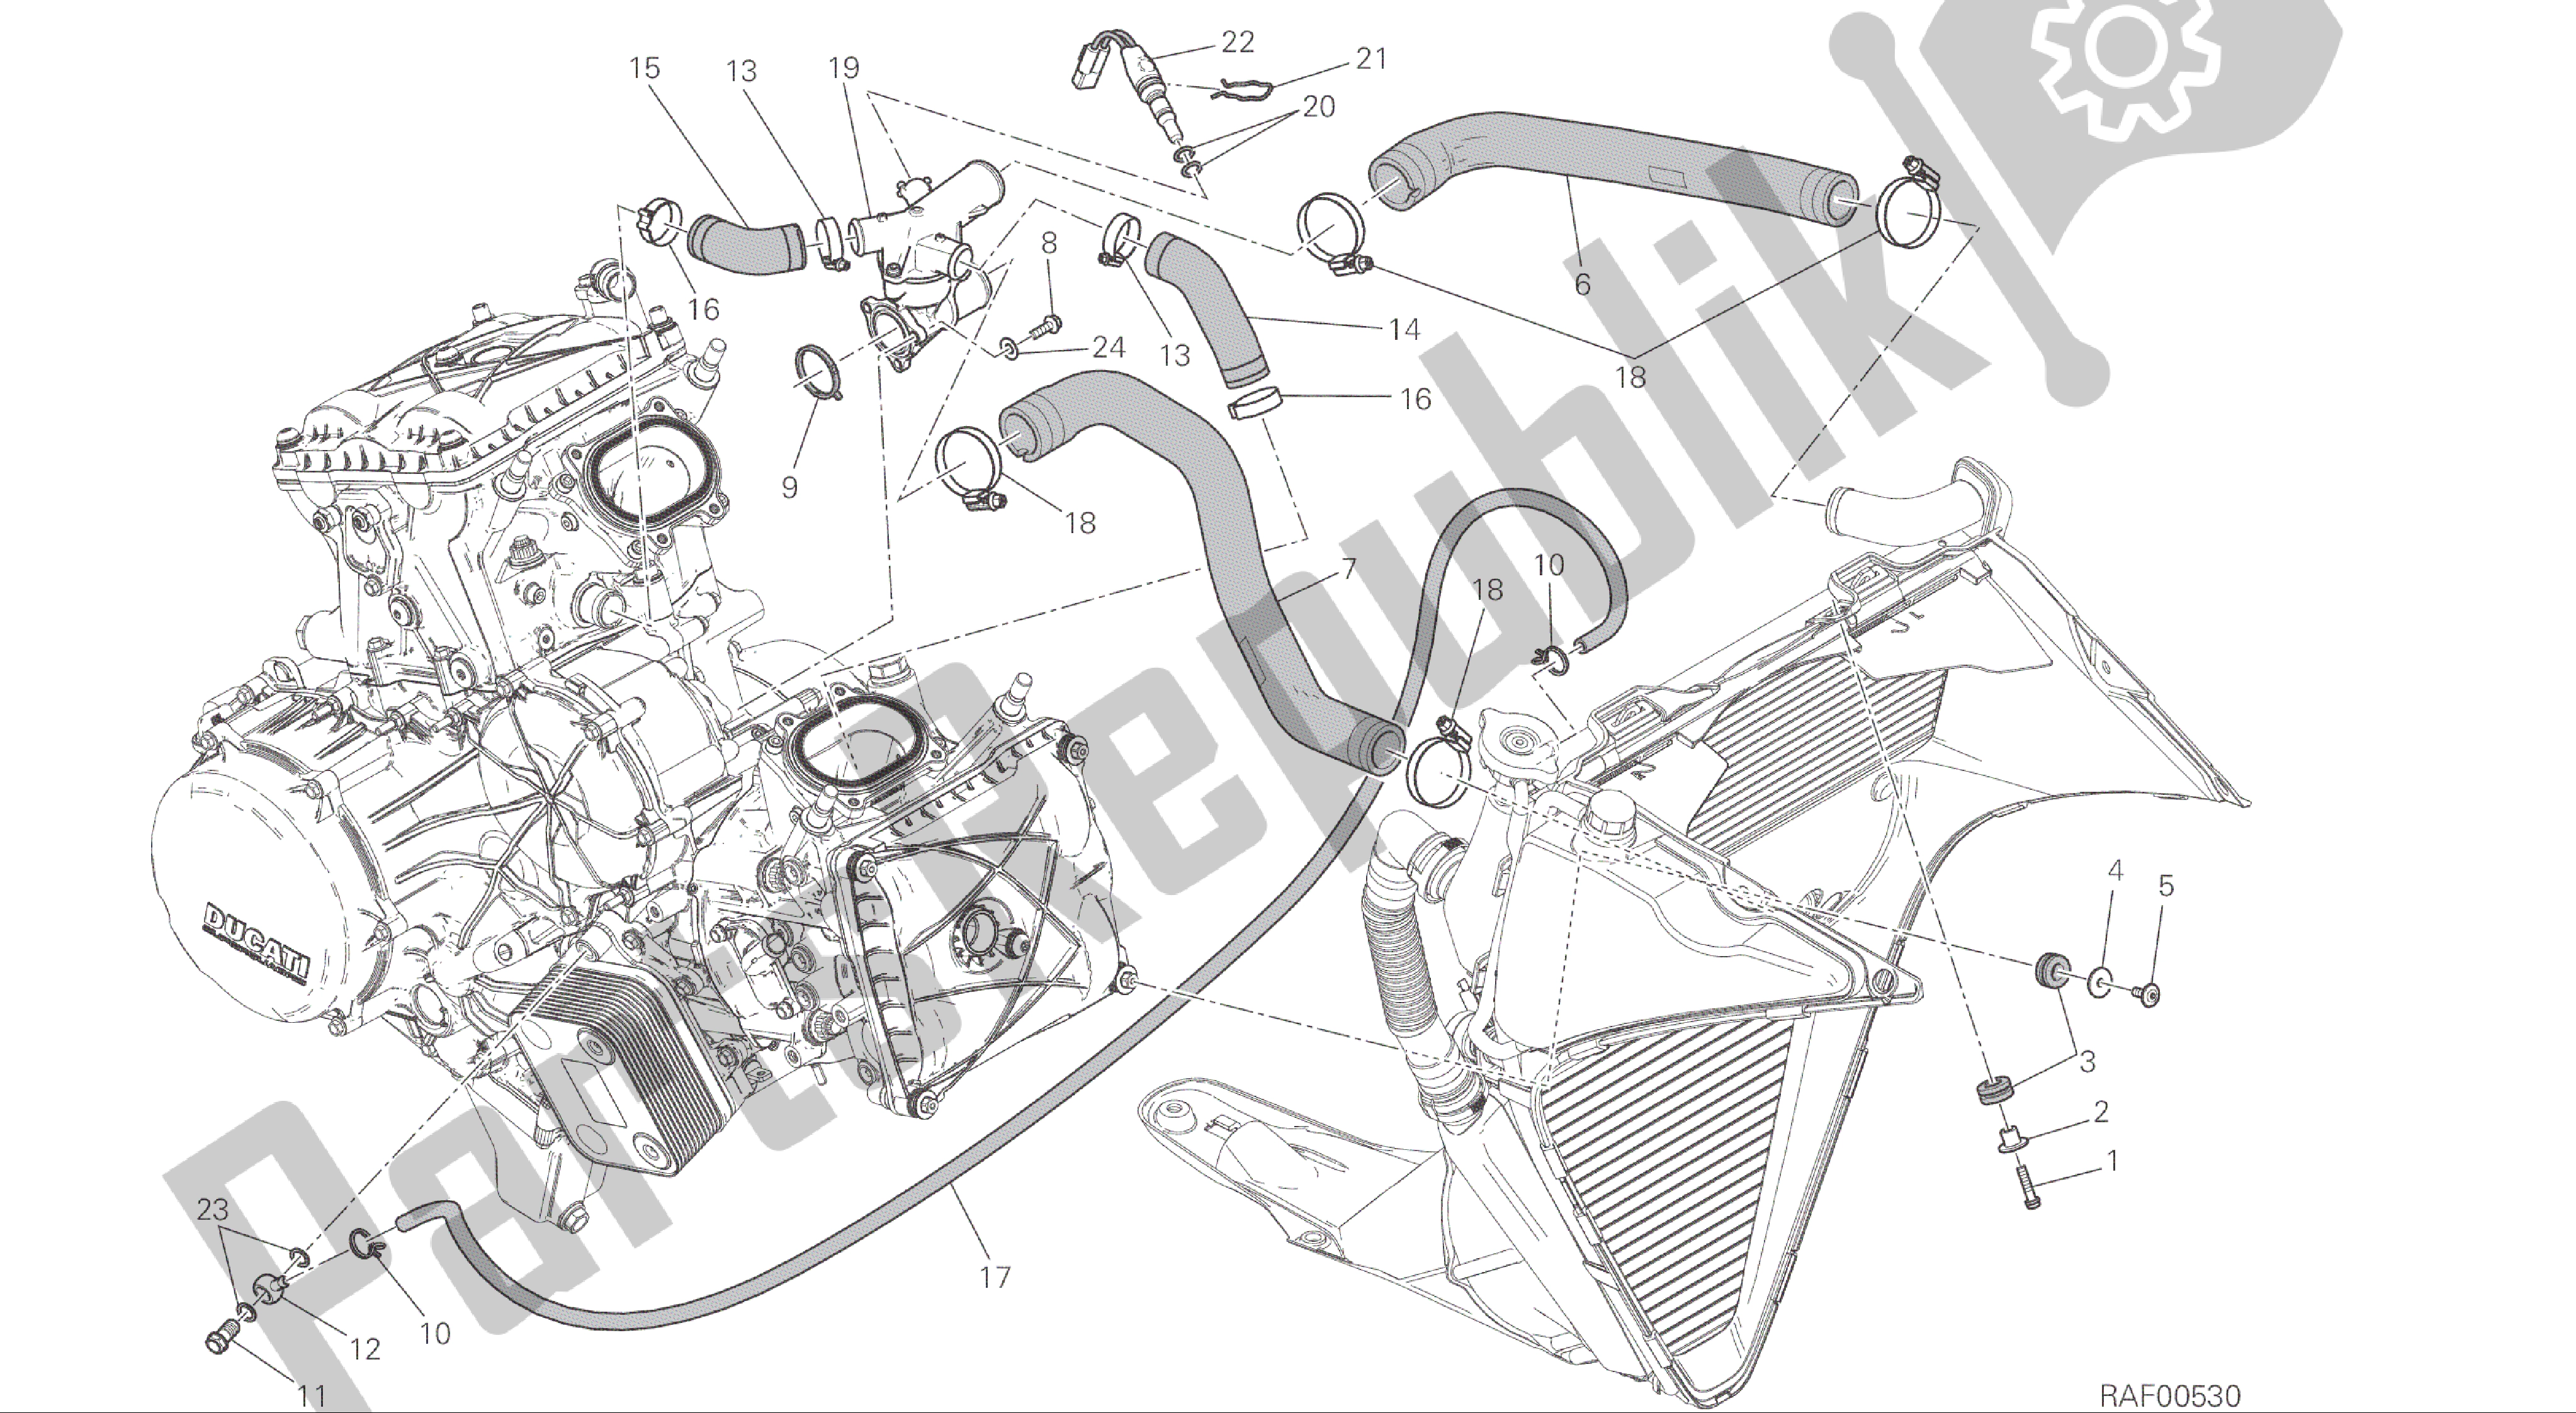 Alle onderdelen voor de Tekening 031 - Koelsysteem [mod: 1299; Xst: Aus, Eur, Fra, Jap, Twn] Groepsframe van de Ducati Panigale ABS 1299 2016